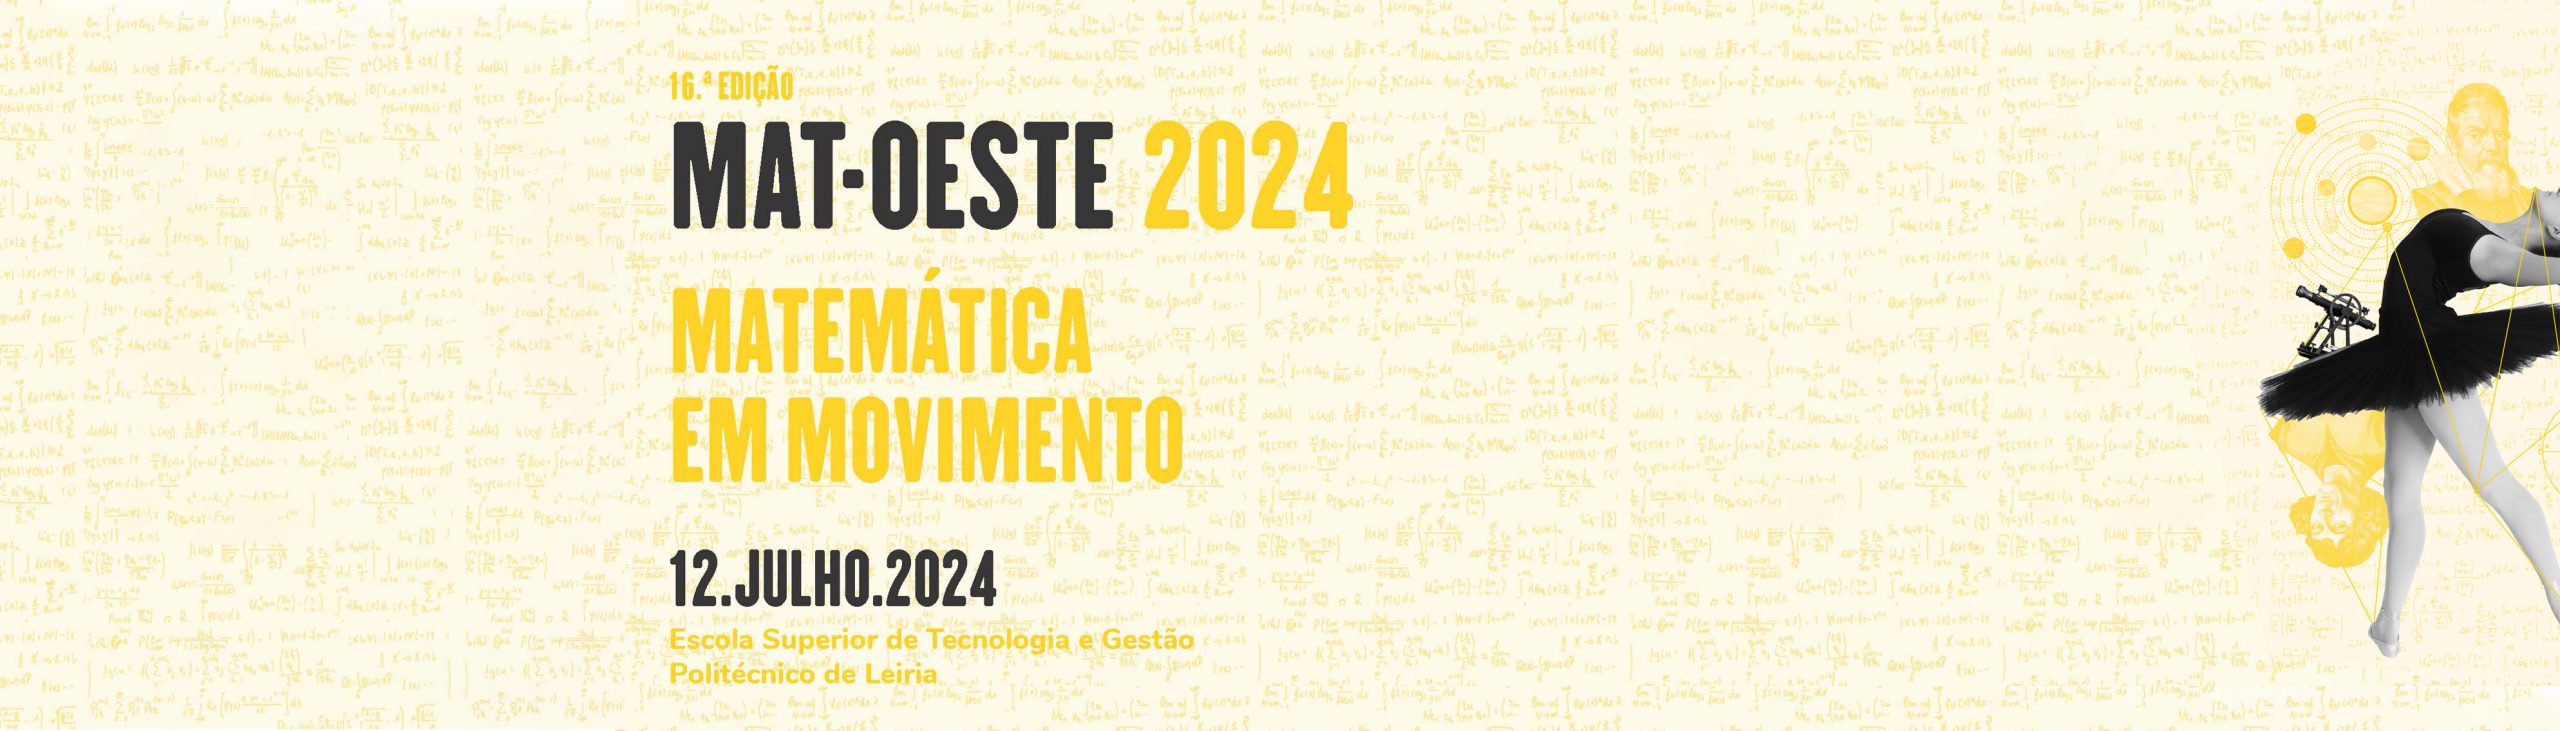 MatOeste_2022